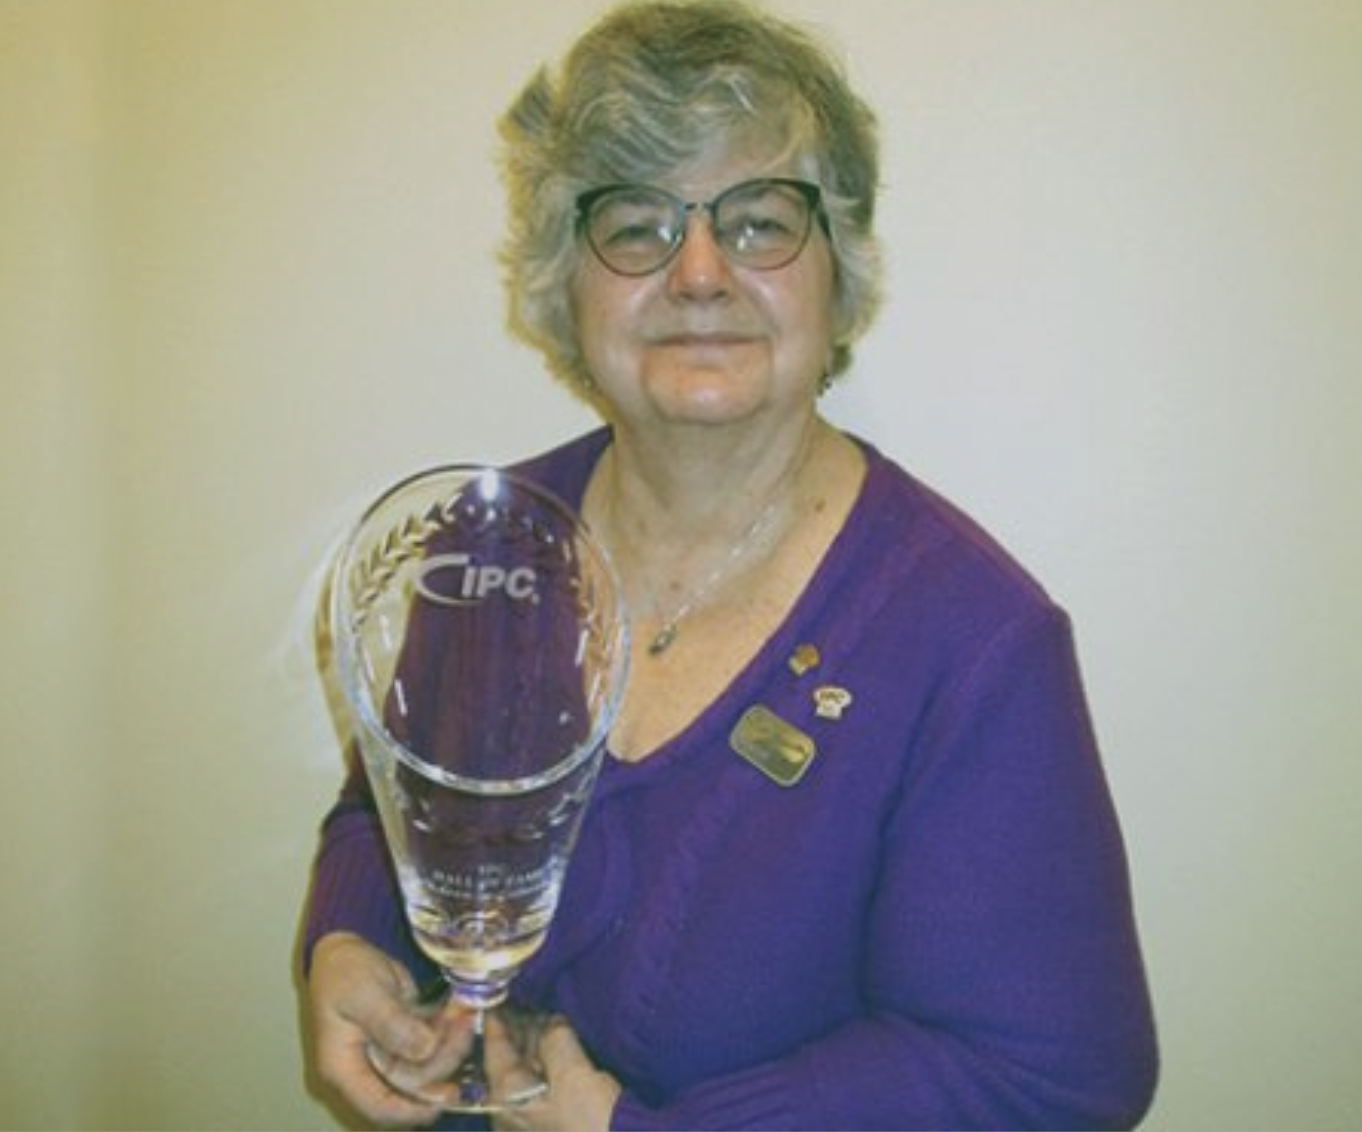 IPC award to Karen McConnell